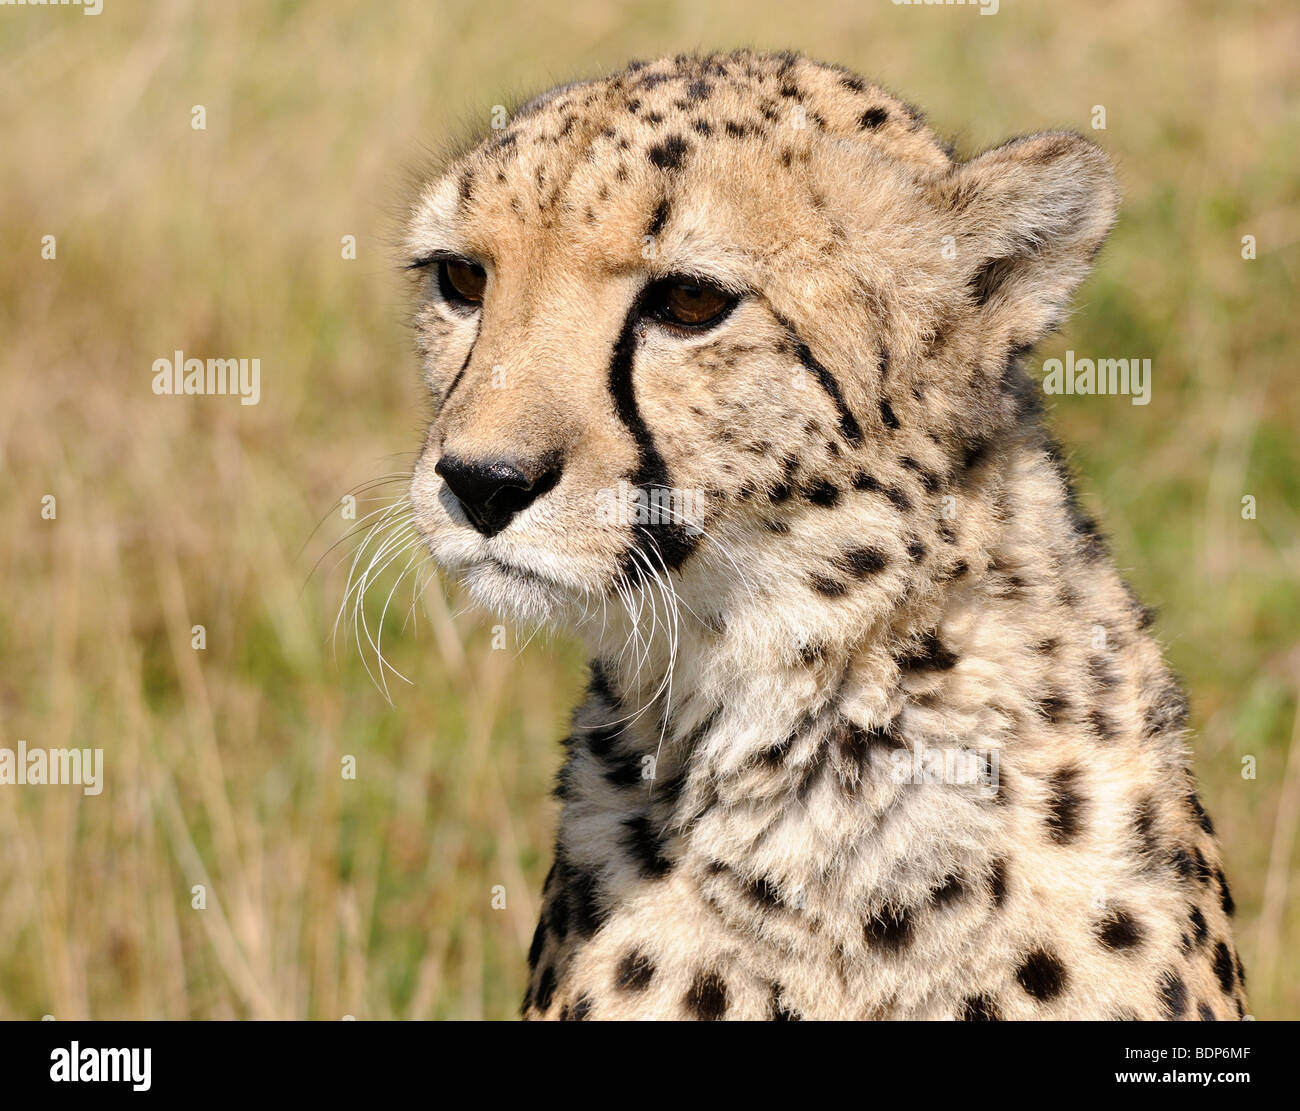 Portrait of a Cheetah (Acinonyx jubatus). Captive animal. Stock Photo